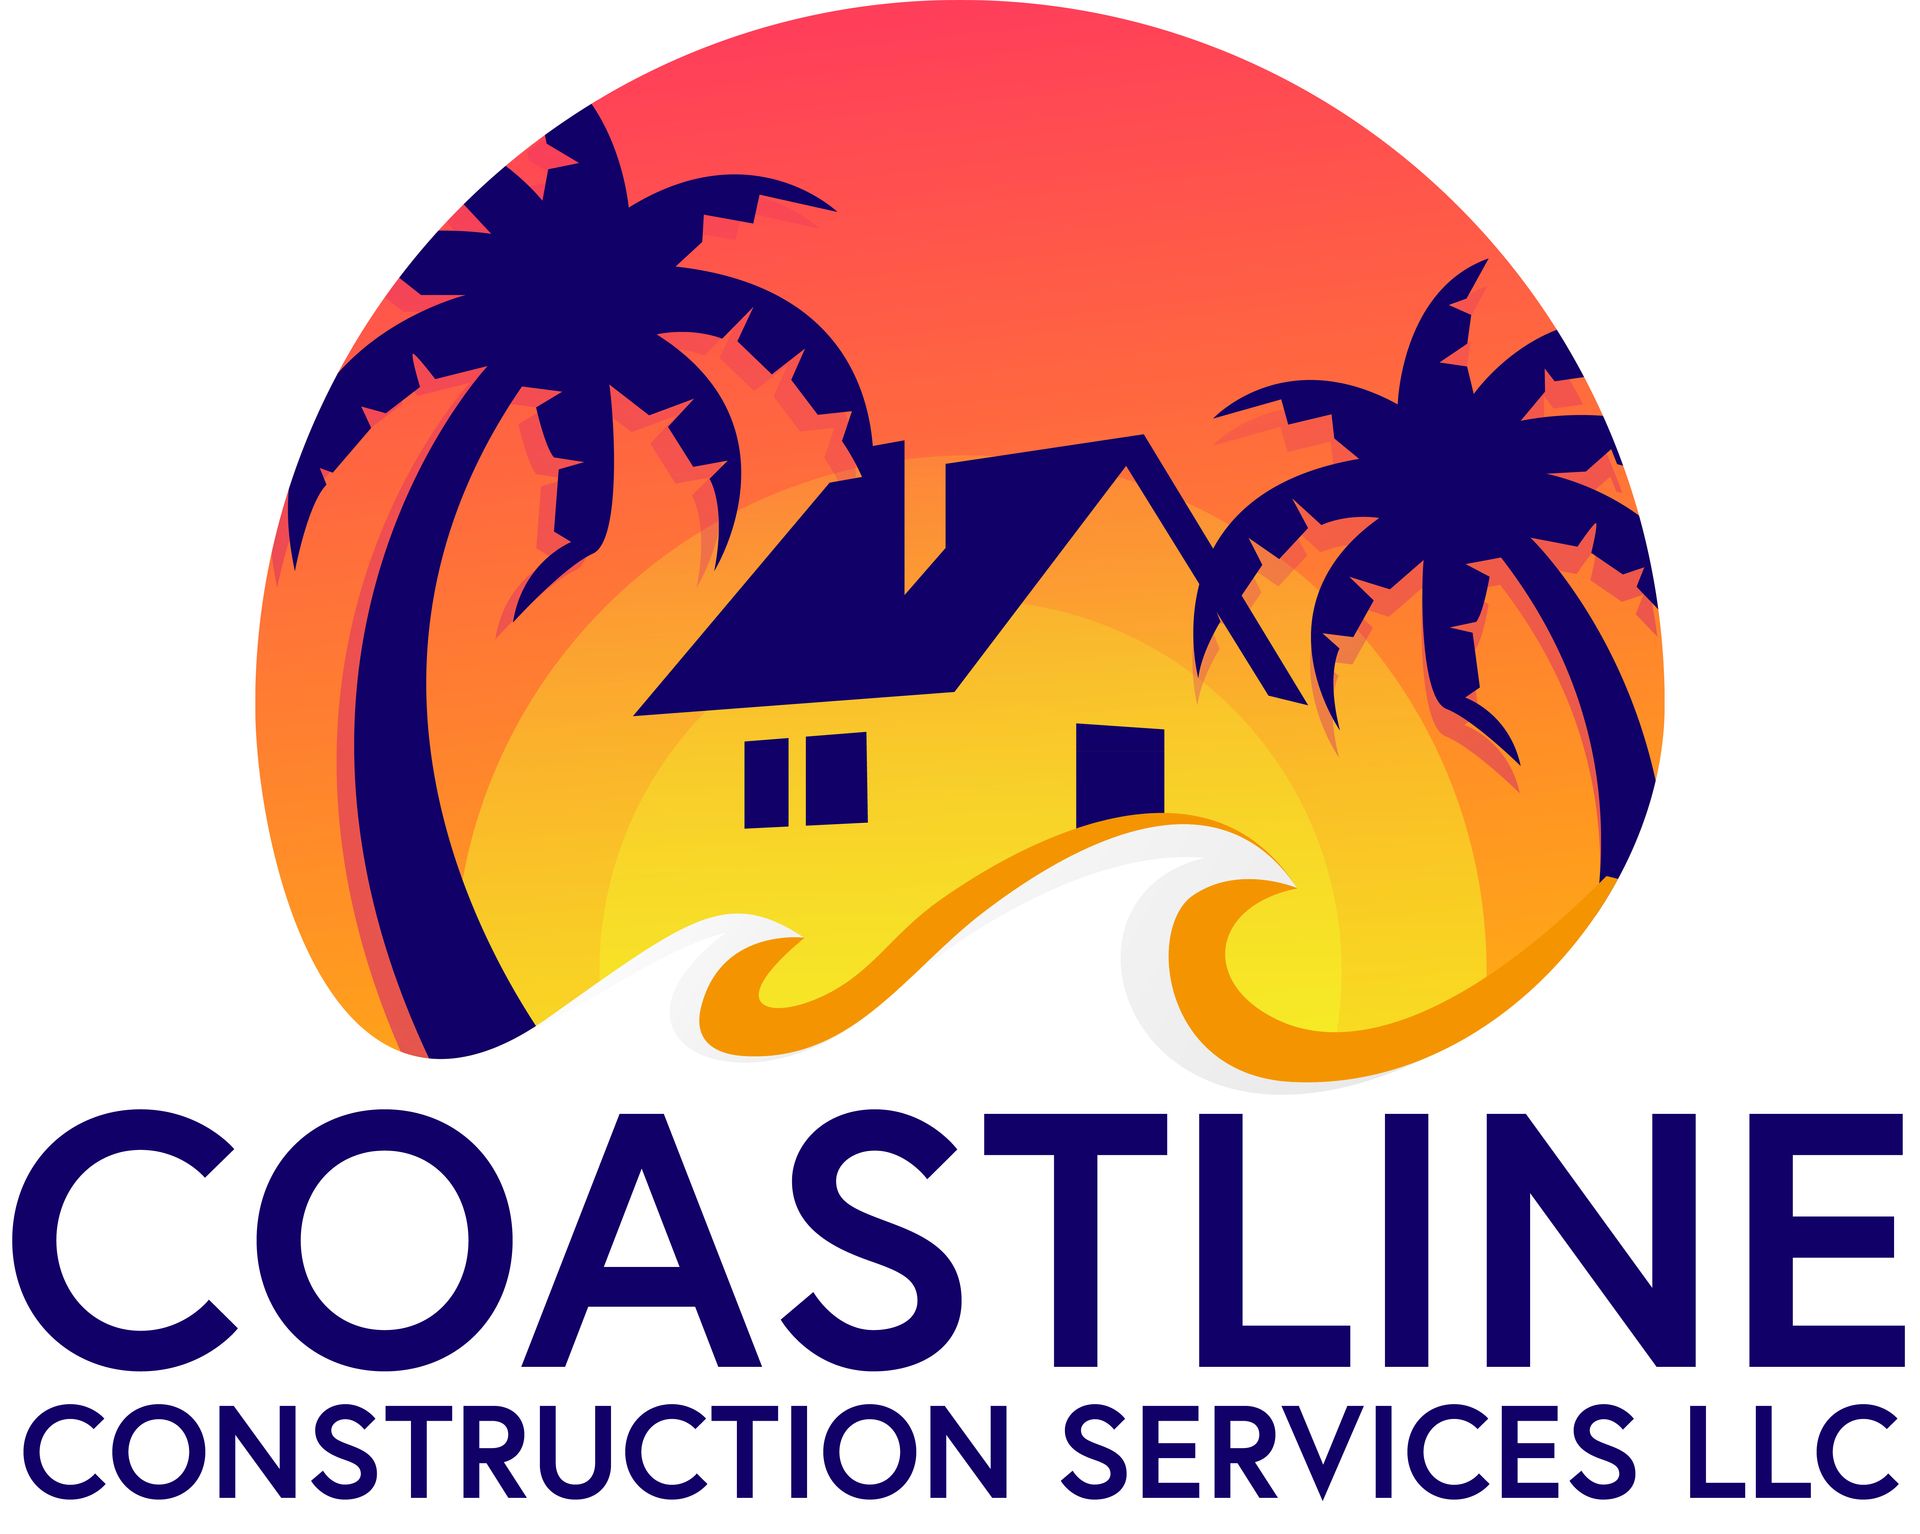 Coastline Construction Services LLC